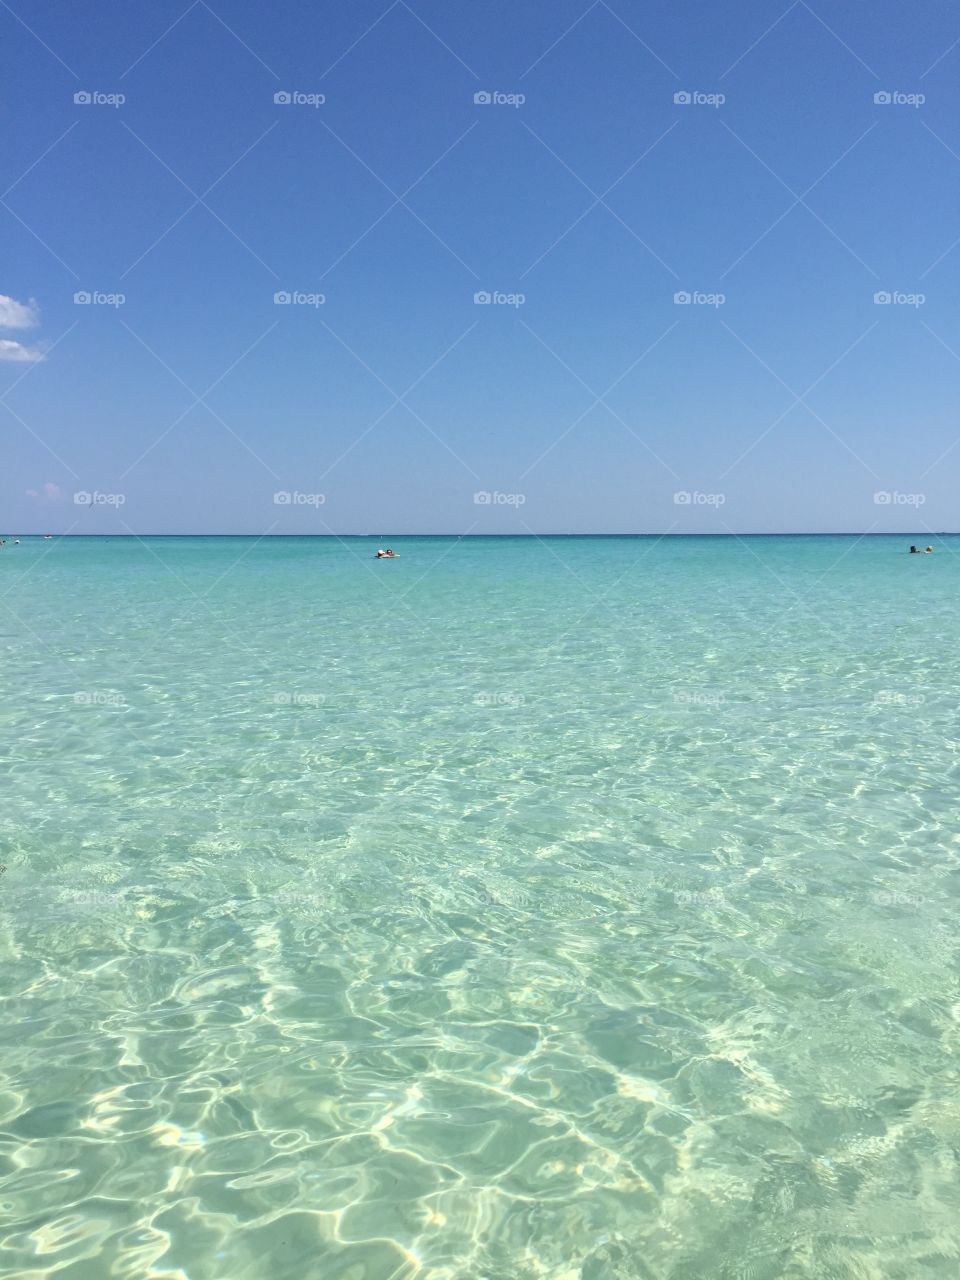 Crystal clear ocean, Gulf of Mexico 